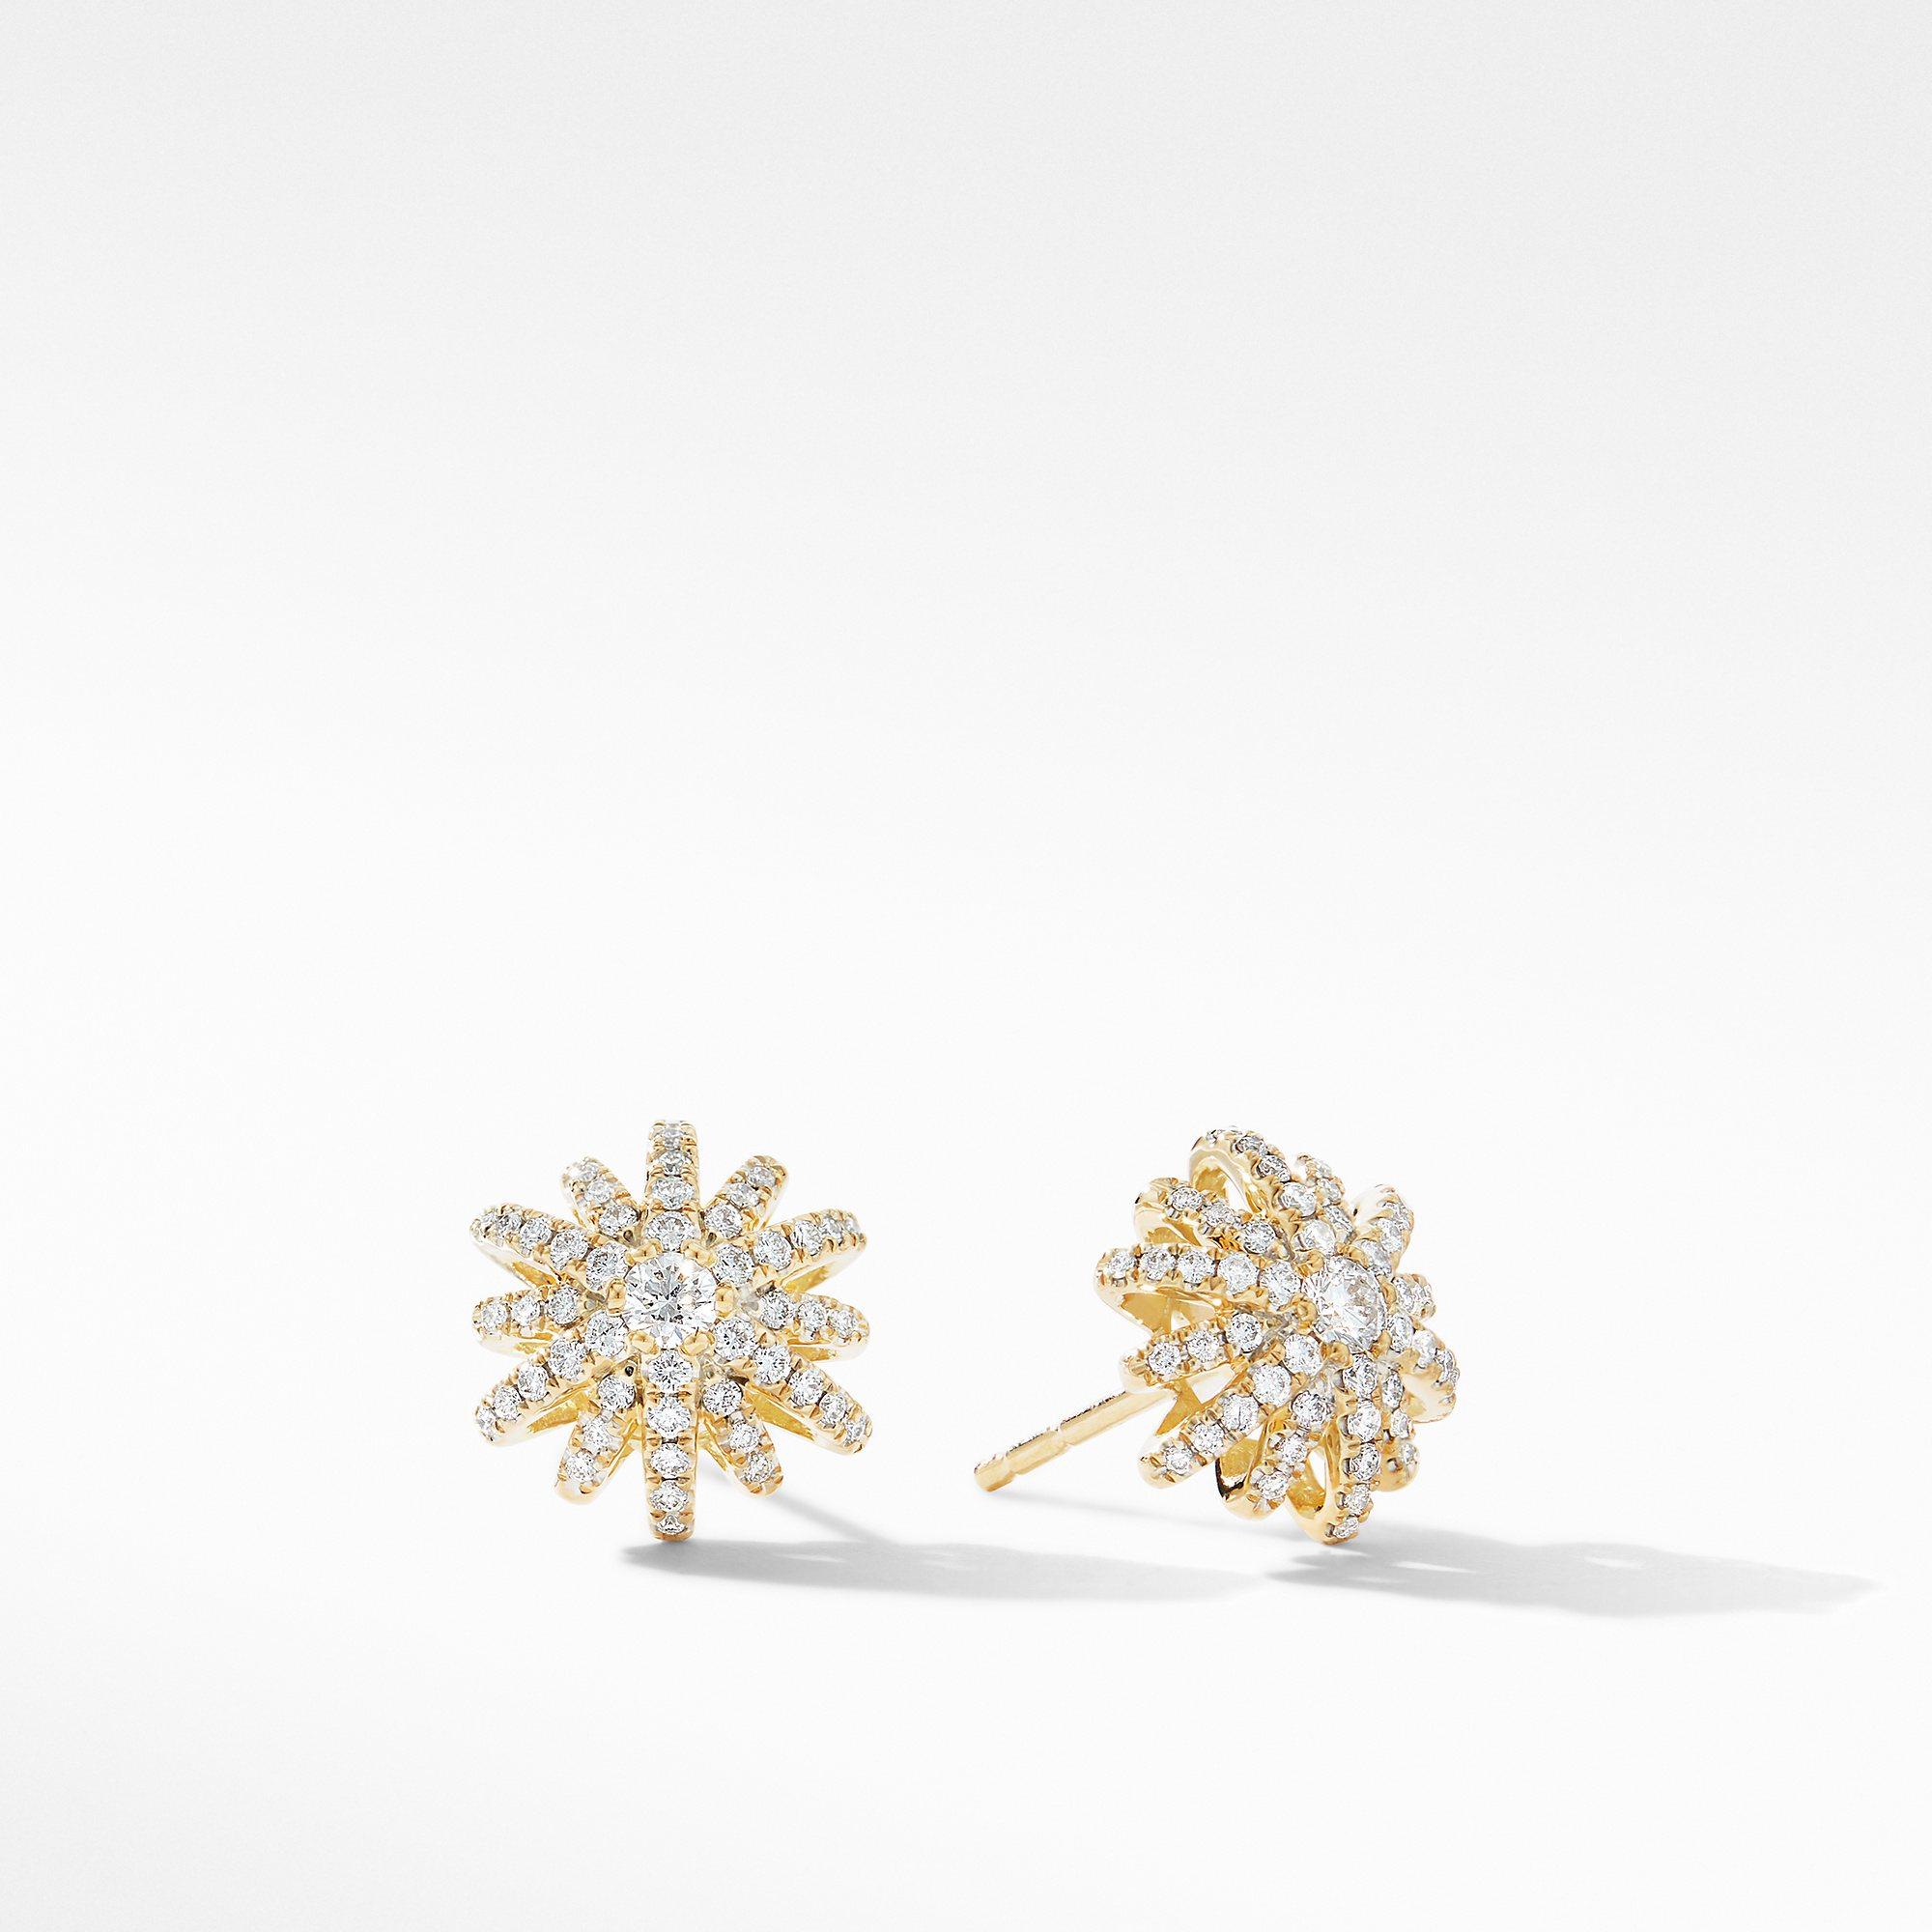 David Yurman Starburst small Stud Earrings in 18k Yellow Gold with Pave Diamonds